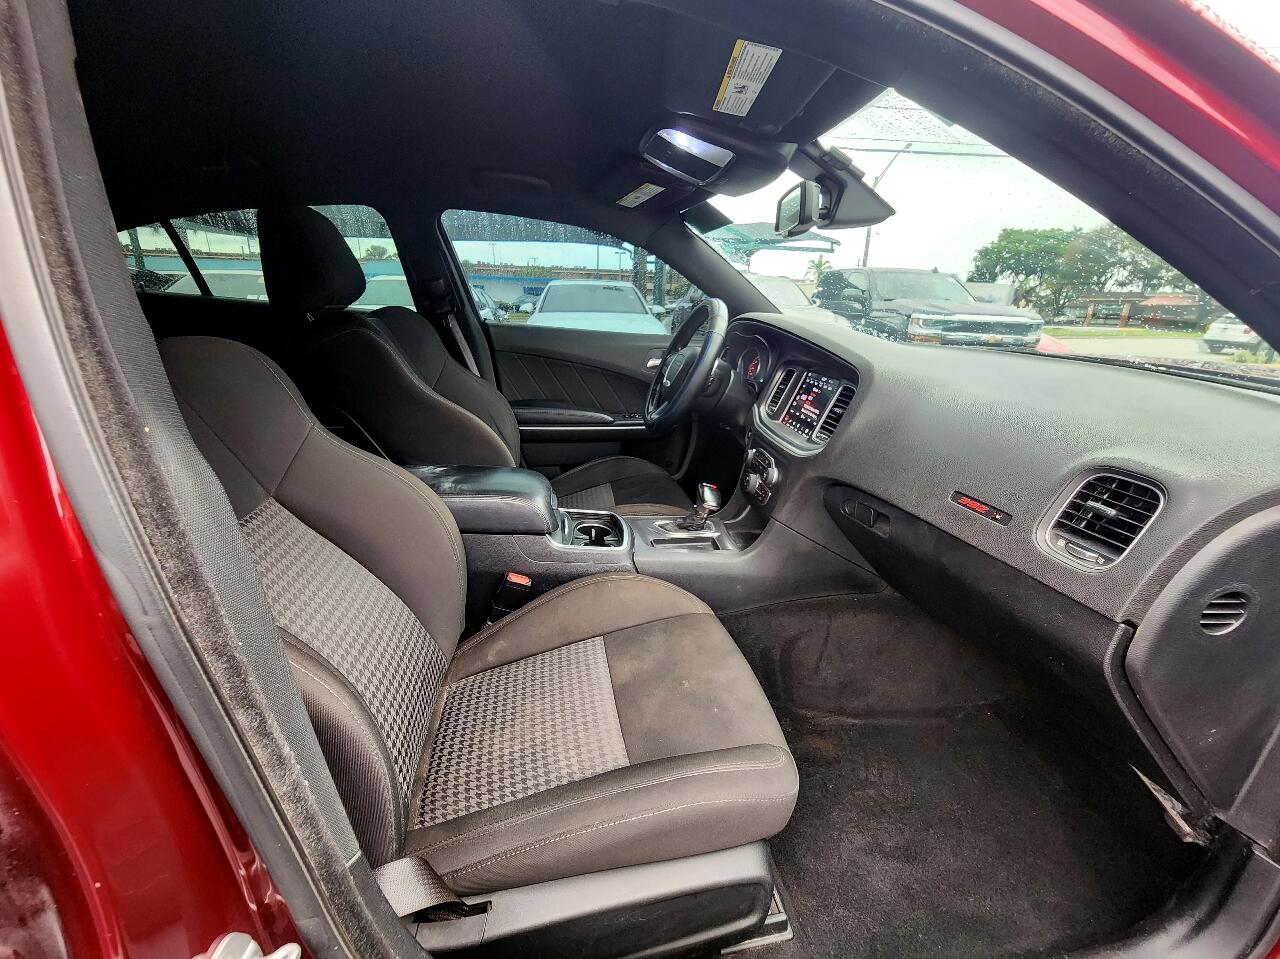 2020 DODGE Charger Sedan - $35,999